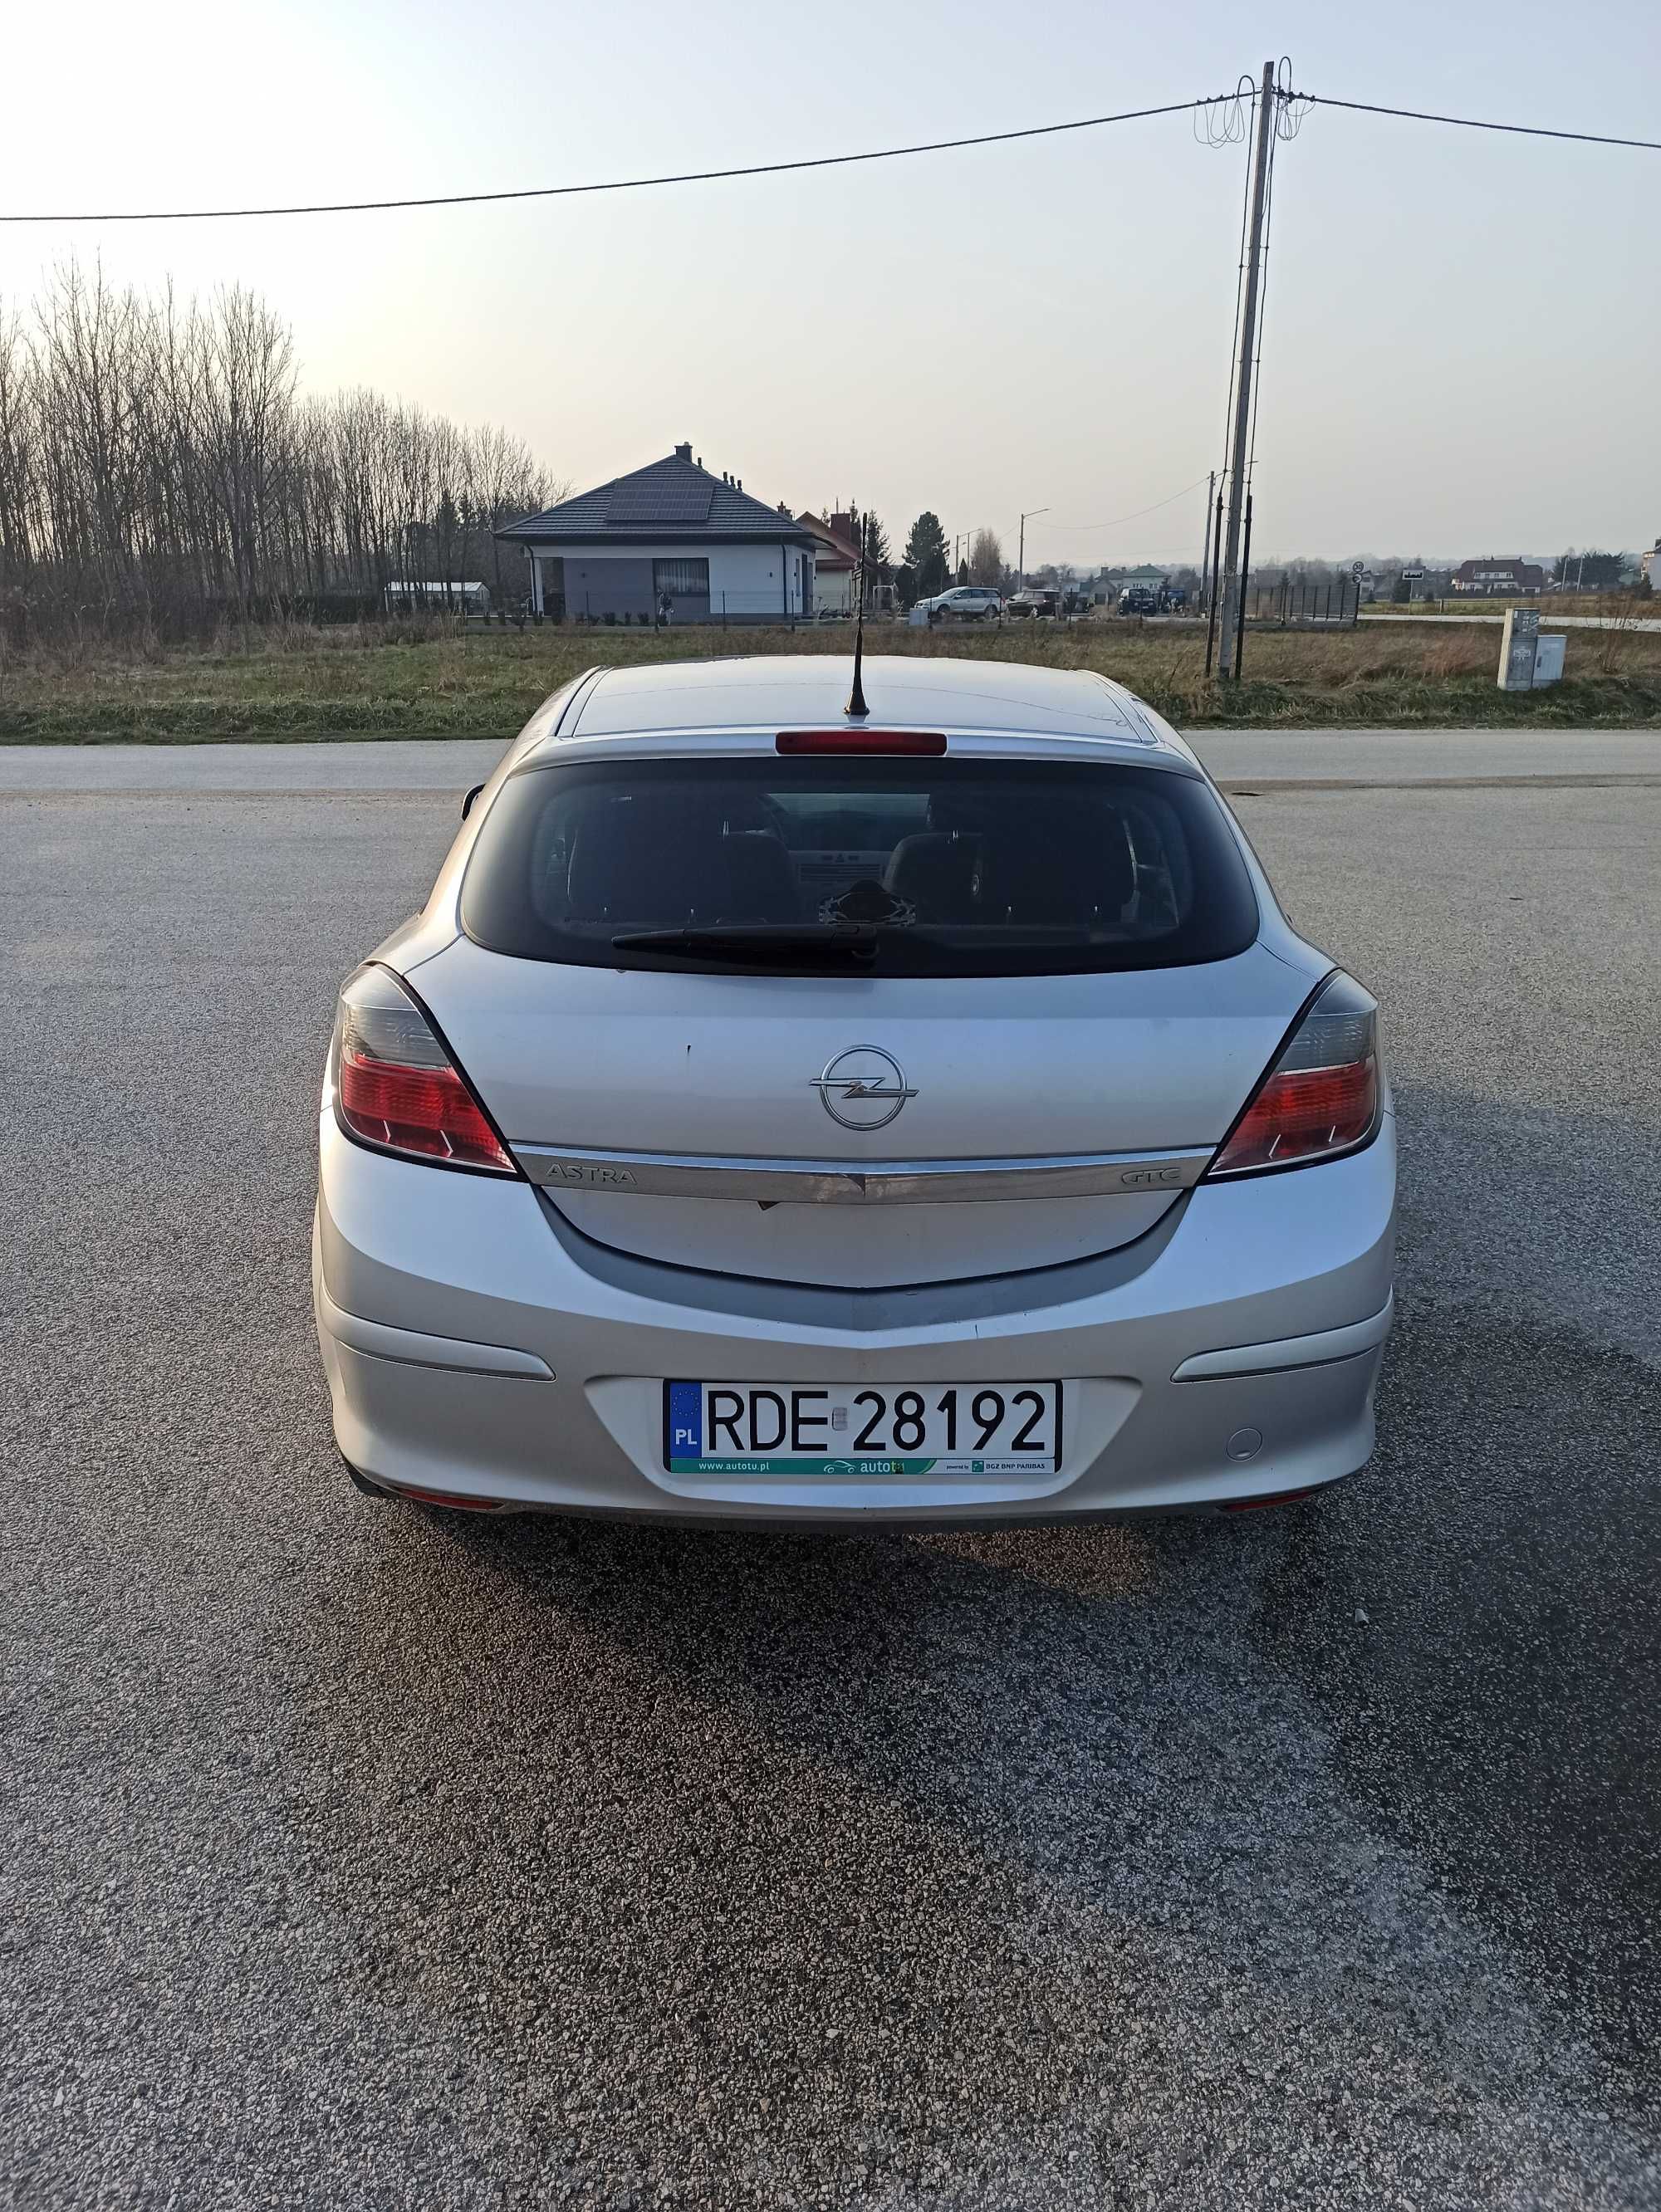 Opel Astra H GTC 1.7 CDTI